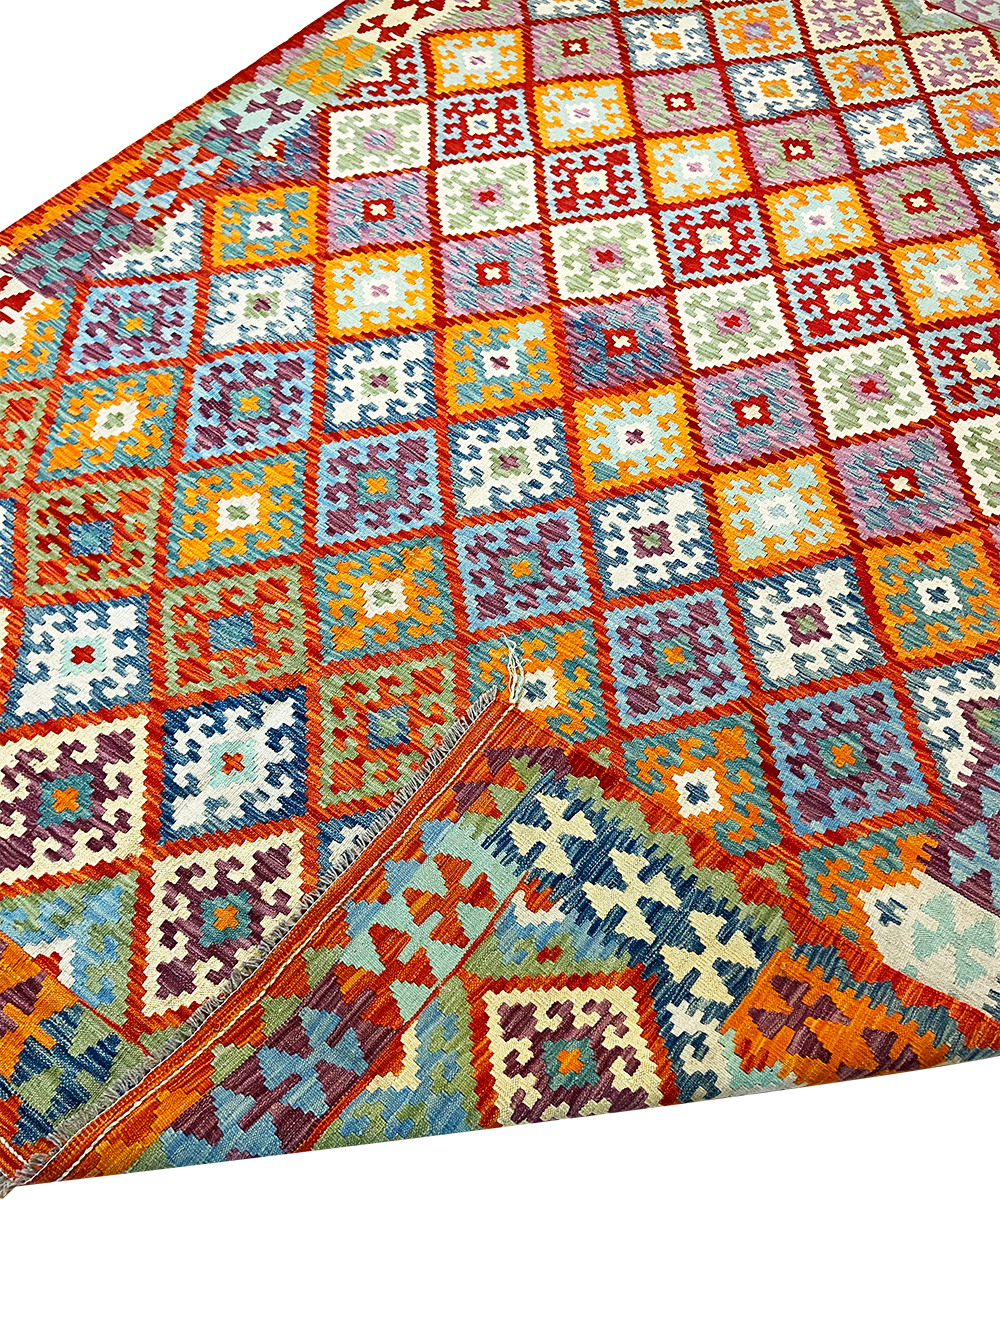 Handmade Colorful Kilim Area Rug  6' 9" X 9' 9"